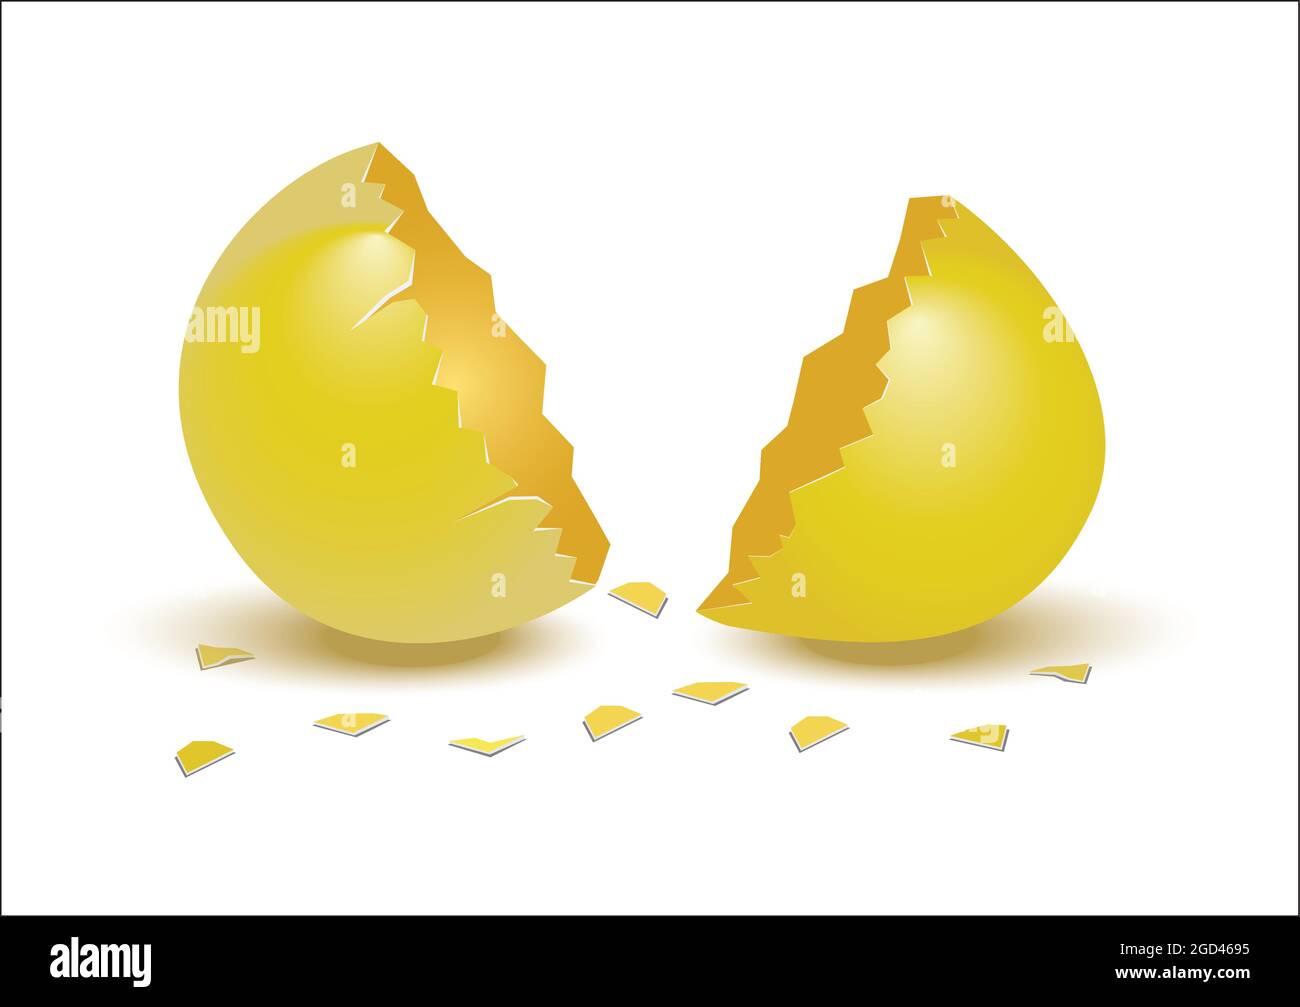 Vector Illustration Of Realistic Broken Golden Egg With Egg Shells